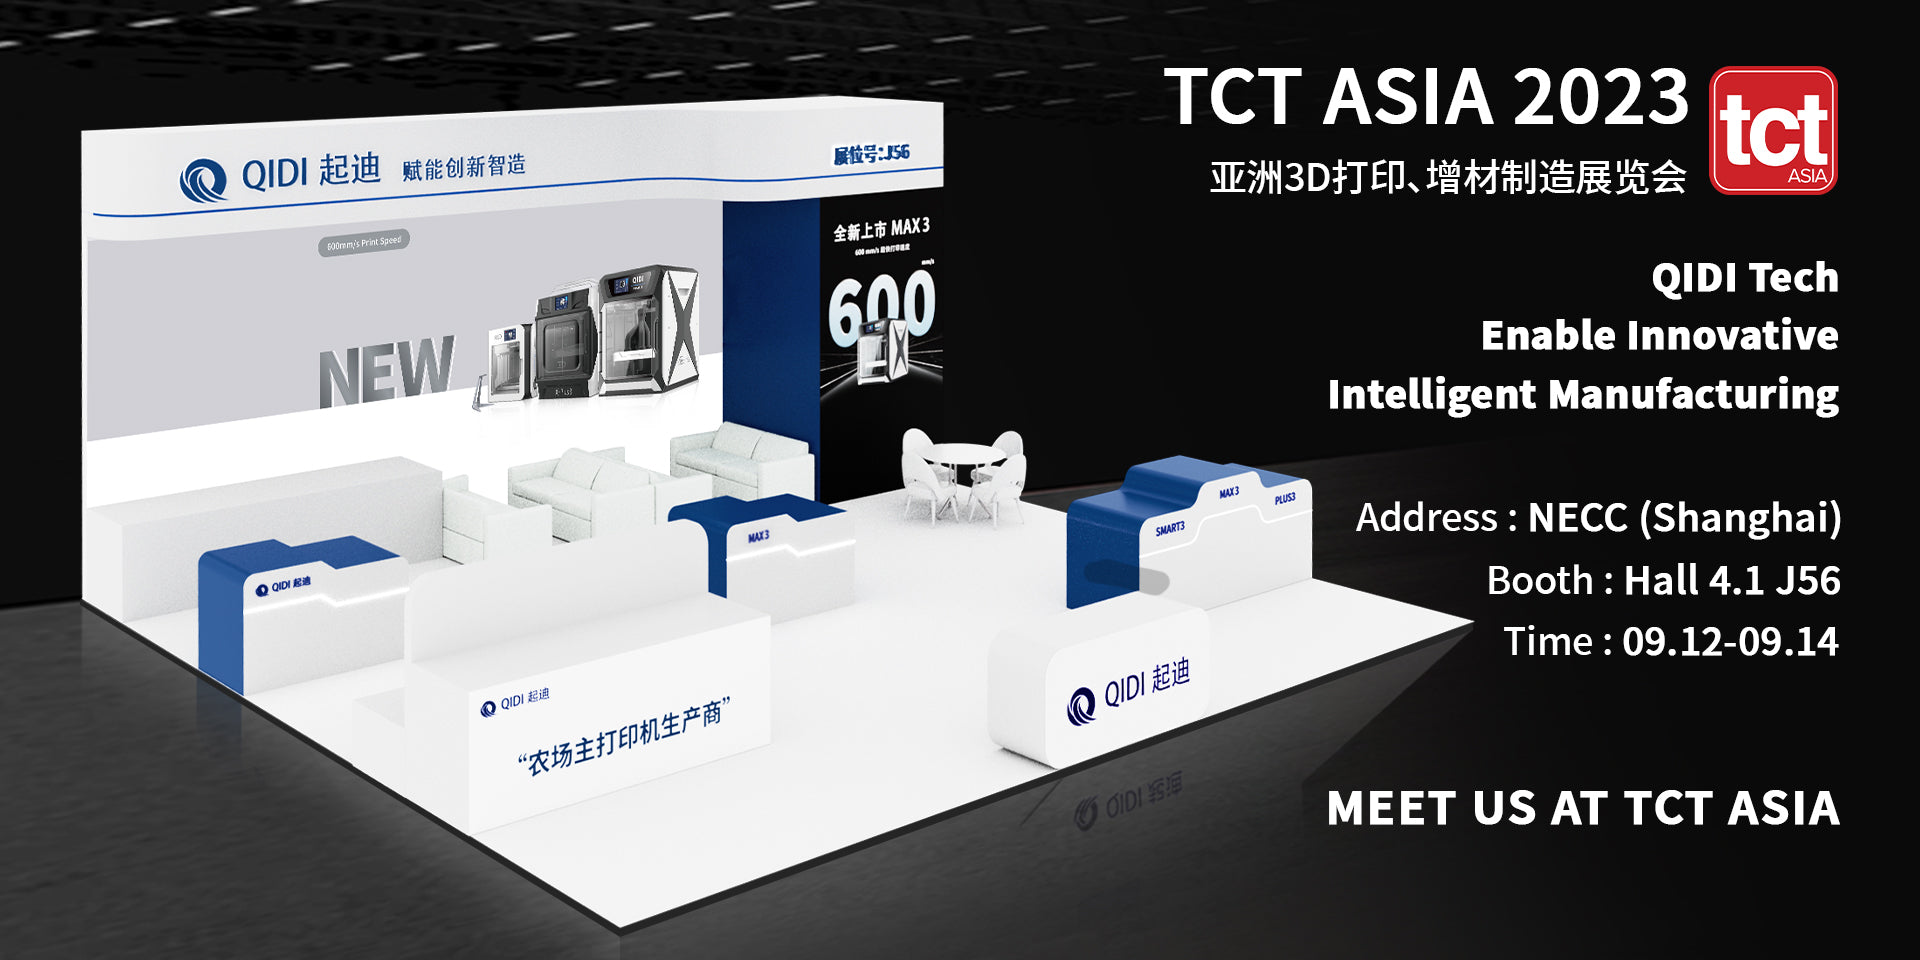 QIDI TECH Debuts New 3D Printers at TCT Asia